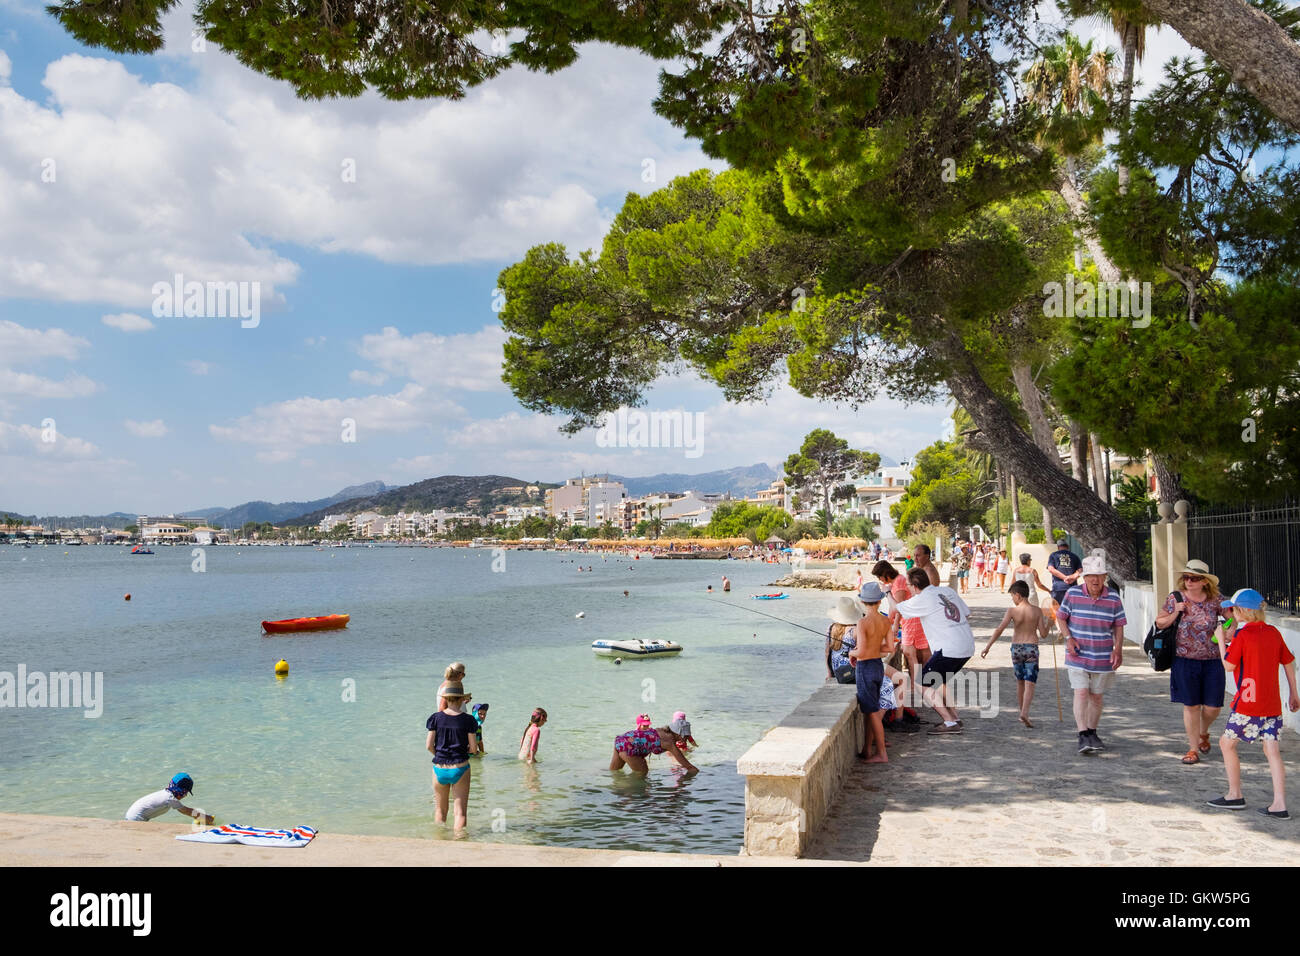 Pine walk and beach at Puerto Pollensa, Mallorca / Majorca Balearic Islands  Spain Stock Photo - Alamy